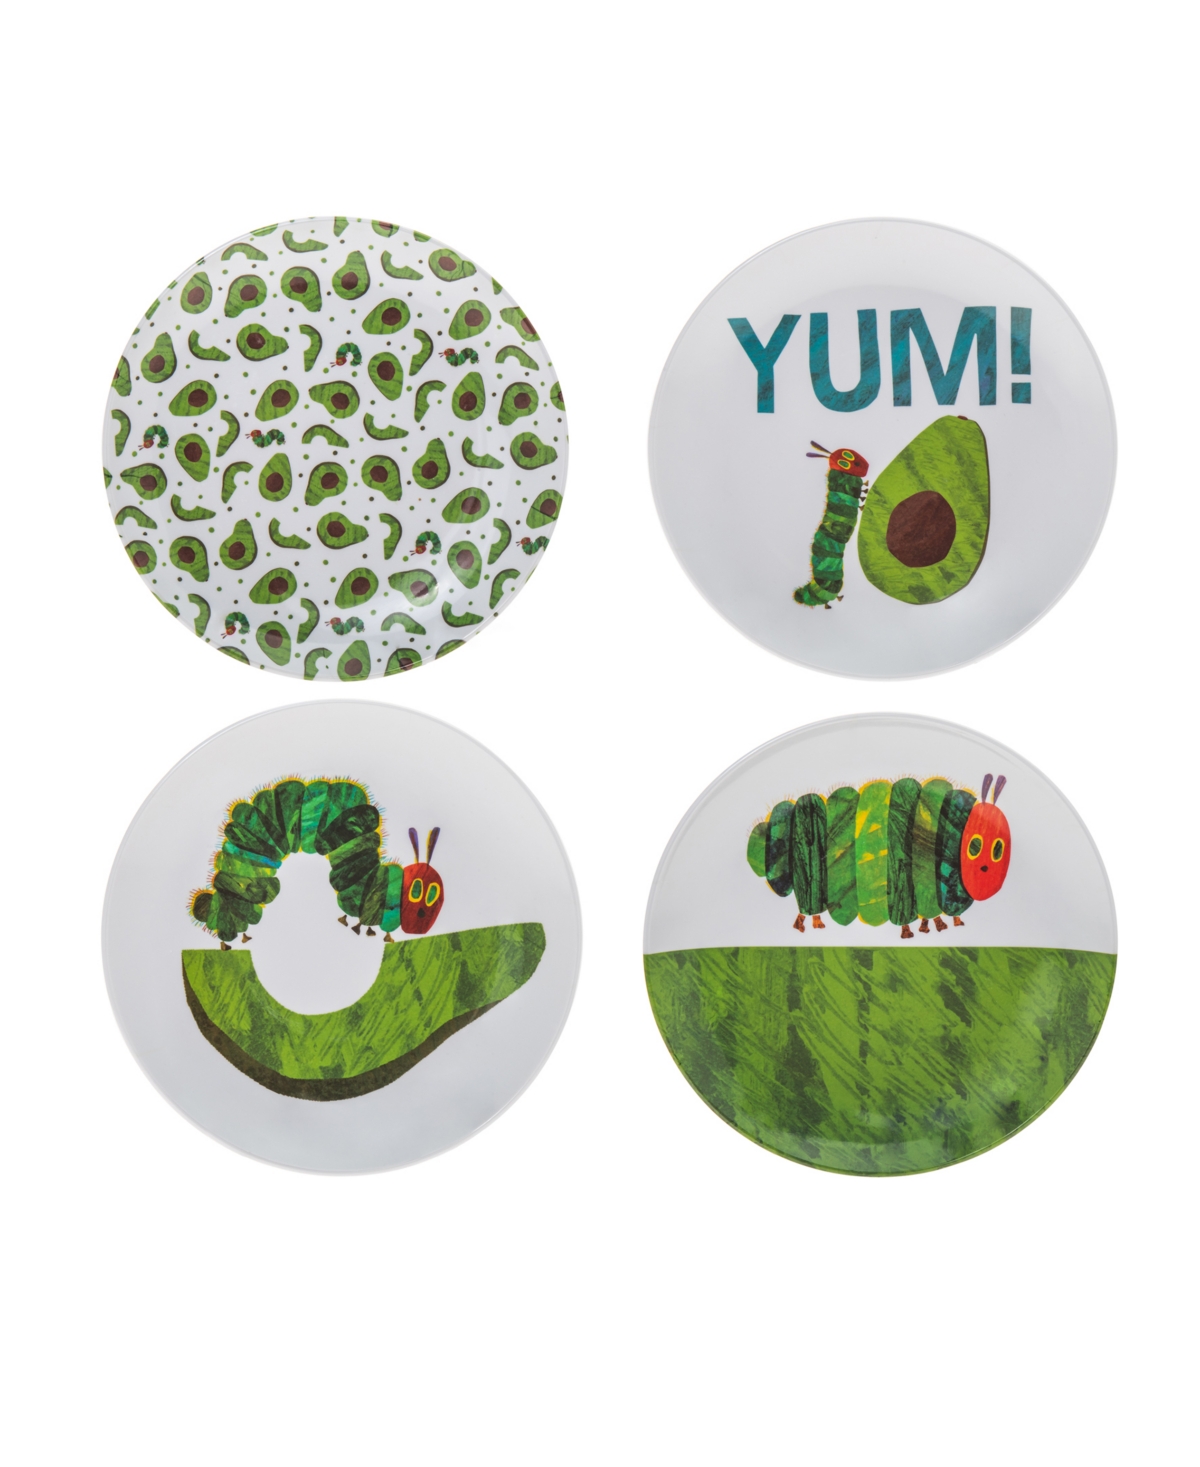 World of Eric Carle Children's Avocado Serving Plates Set, 4 Piece - White